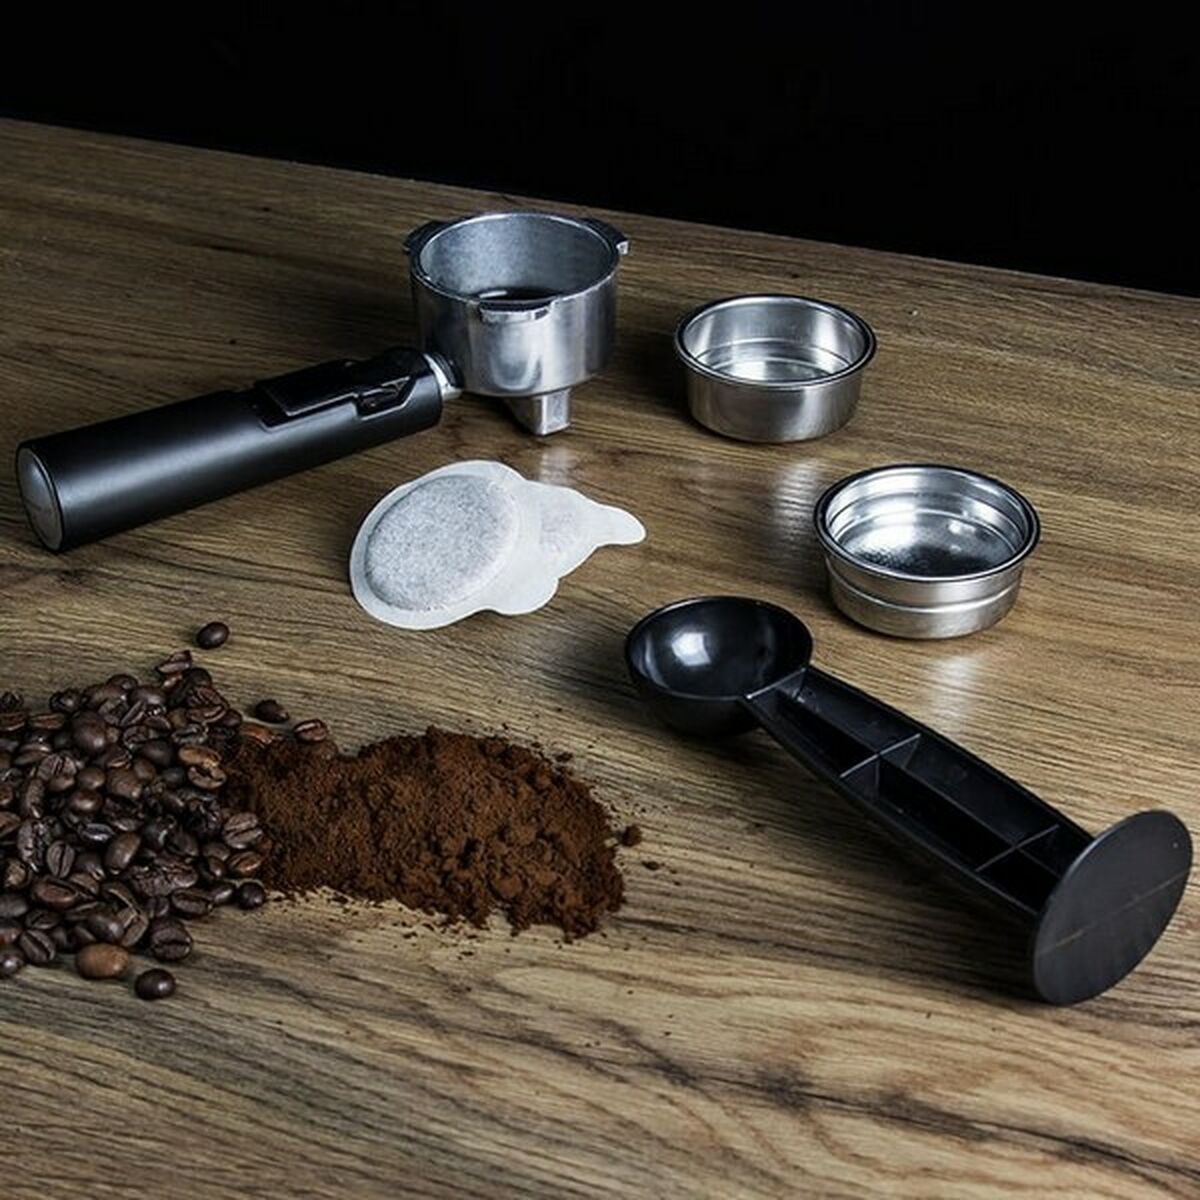 Express Manual Coffee Machine Cecotec Power Espresso 20 1,5 L 850W 1,5